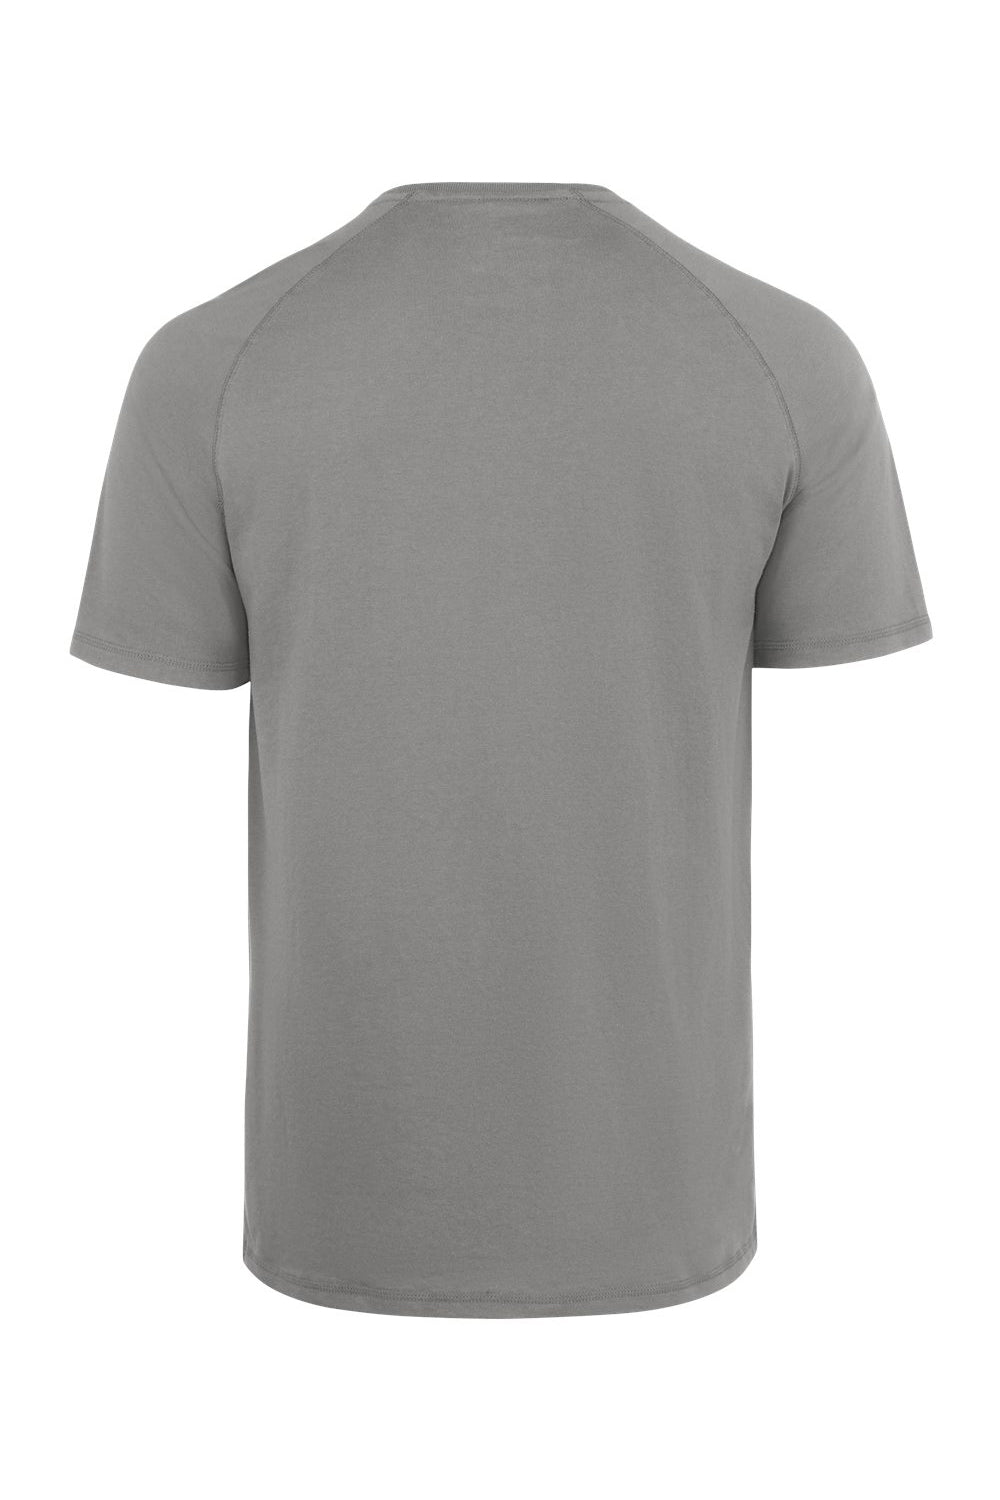 Dickies S600 Mens Performance Moisture Wicking Short Sleeve Crewneck T-Shirt w/ Pocket Smoke Grey Flat Back